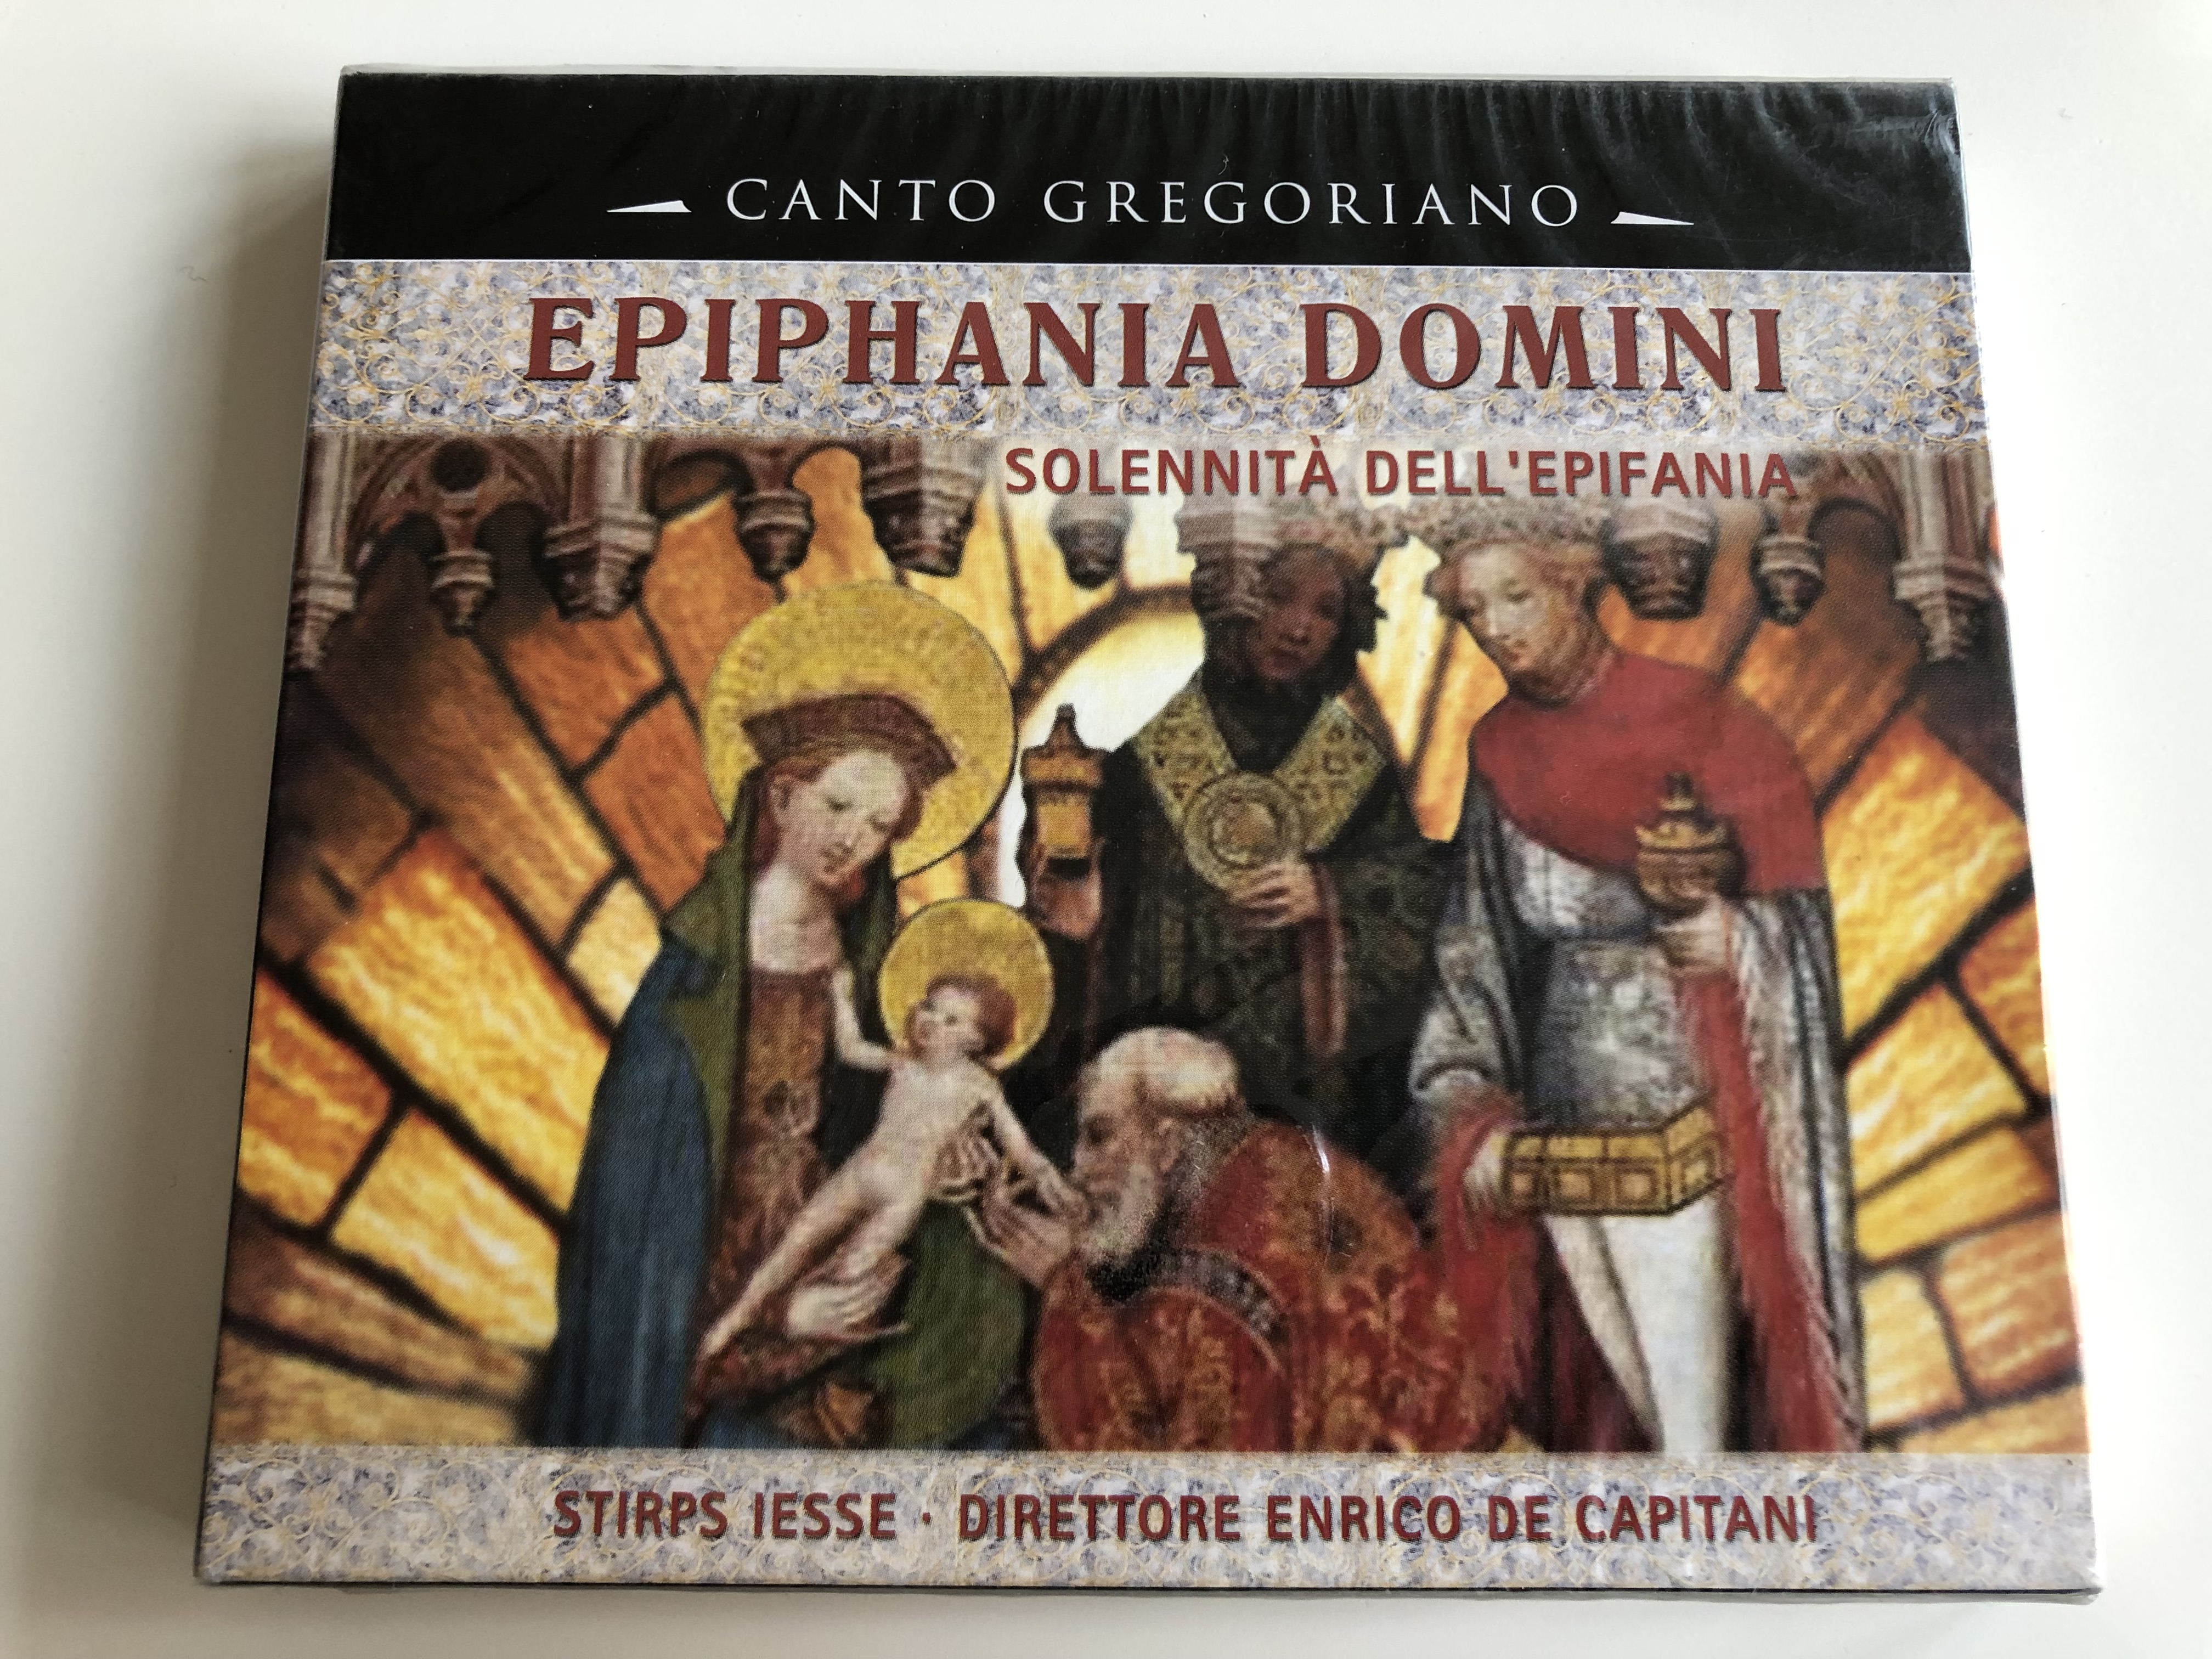 canto-gregoriano-epiphania-domini-solennit-dell-epifania-stirps-iesse-direttore-enrico-de-capitani-epiphany-collana-diretta-da-bonifacio-g.-baroffio-audio-cd-1996-fsp-paoline-1-.jpg